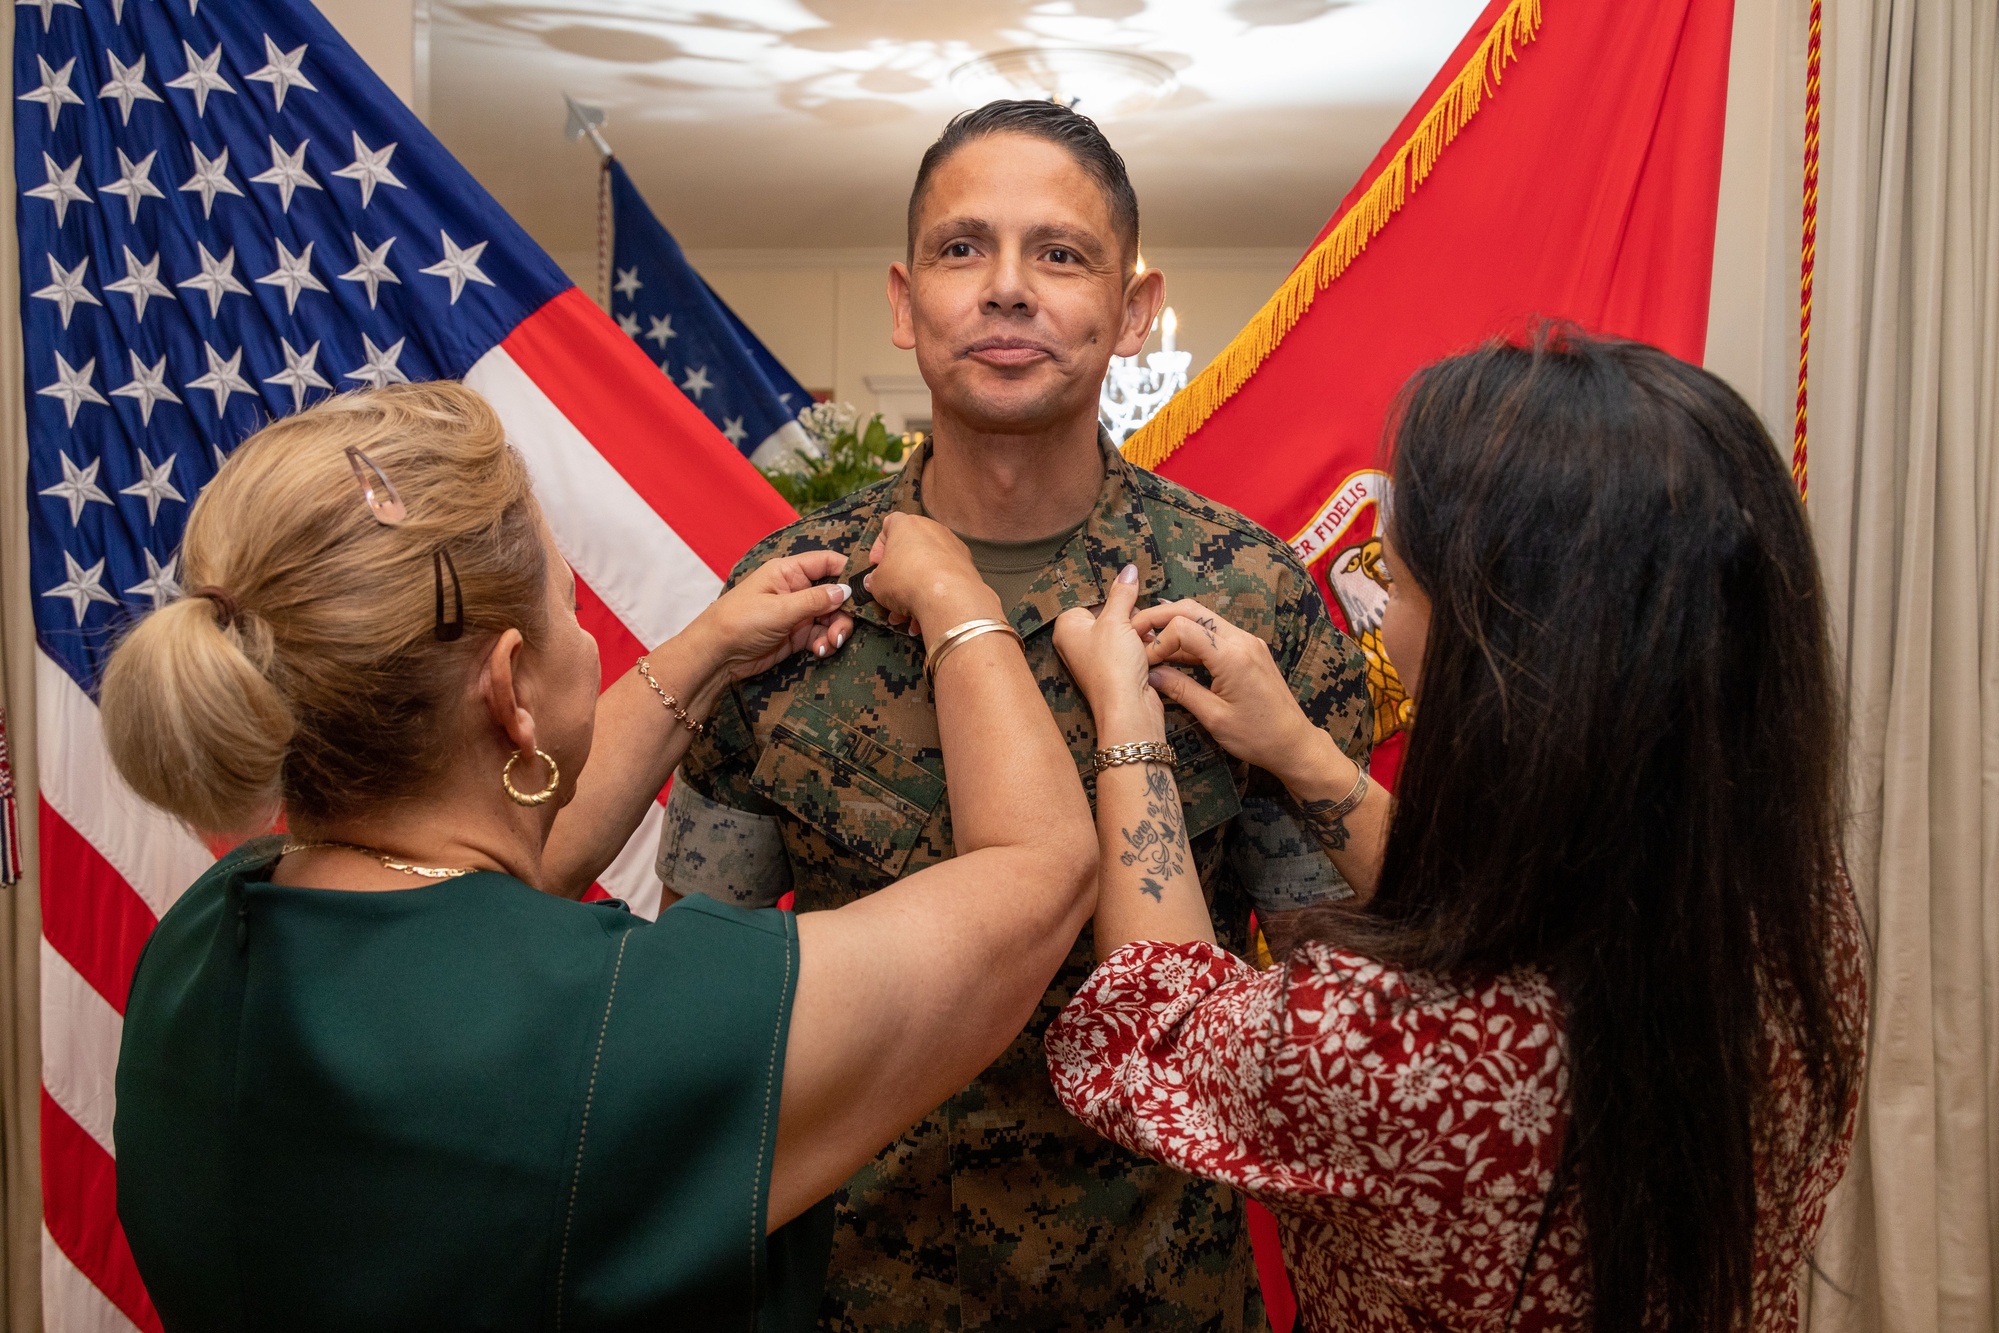 DVIDS - Images - Sgt. Maj. Ruiz Promotes to 20th Sergeant Major of